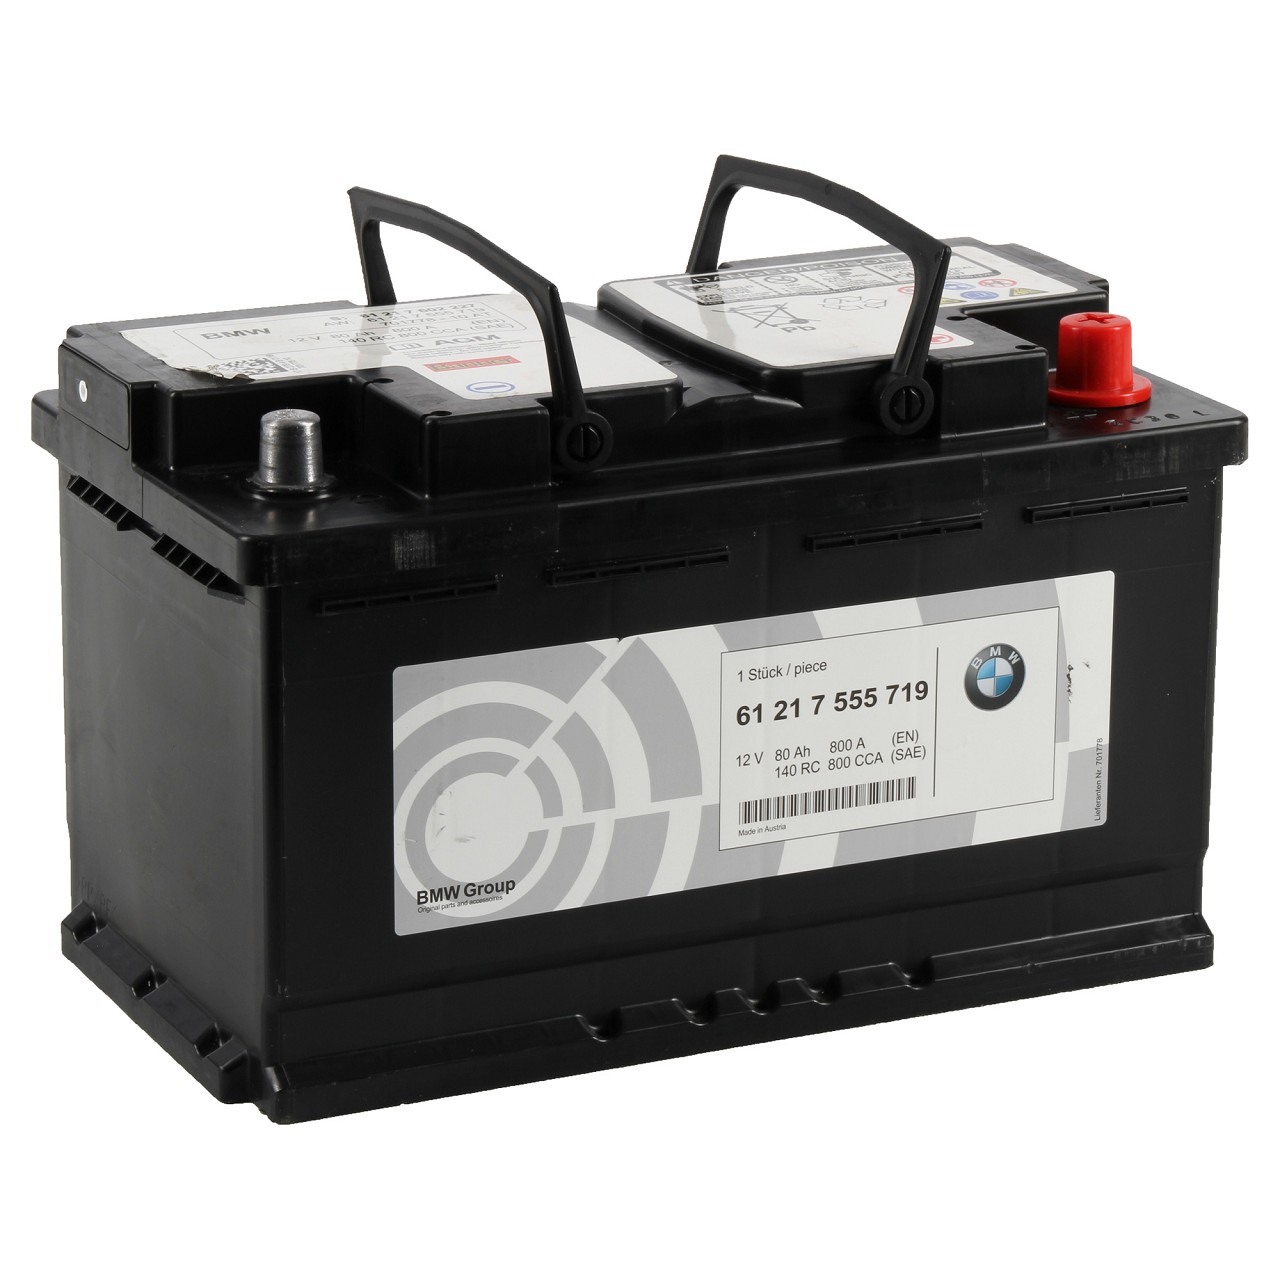 ORIGINAL BMW Autobatterie Batterie Starterbatterie 12V 80Ah 800A 61217555719